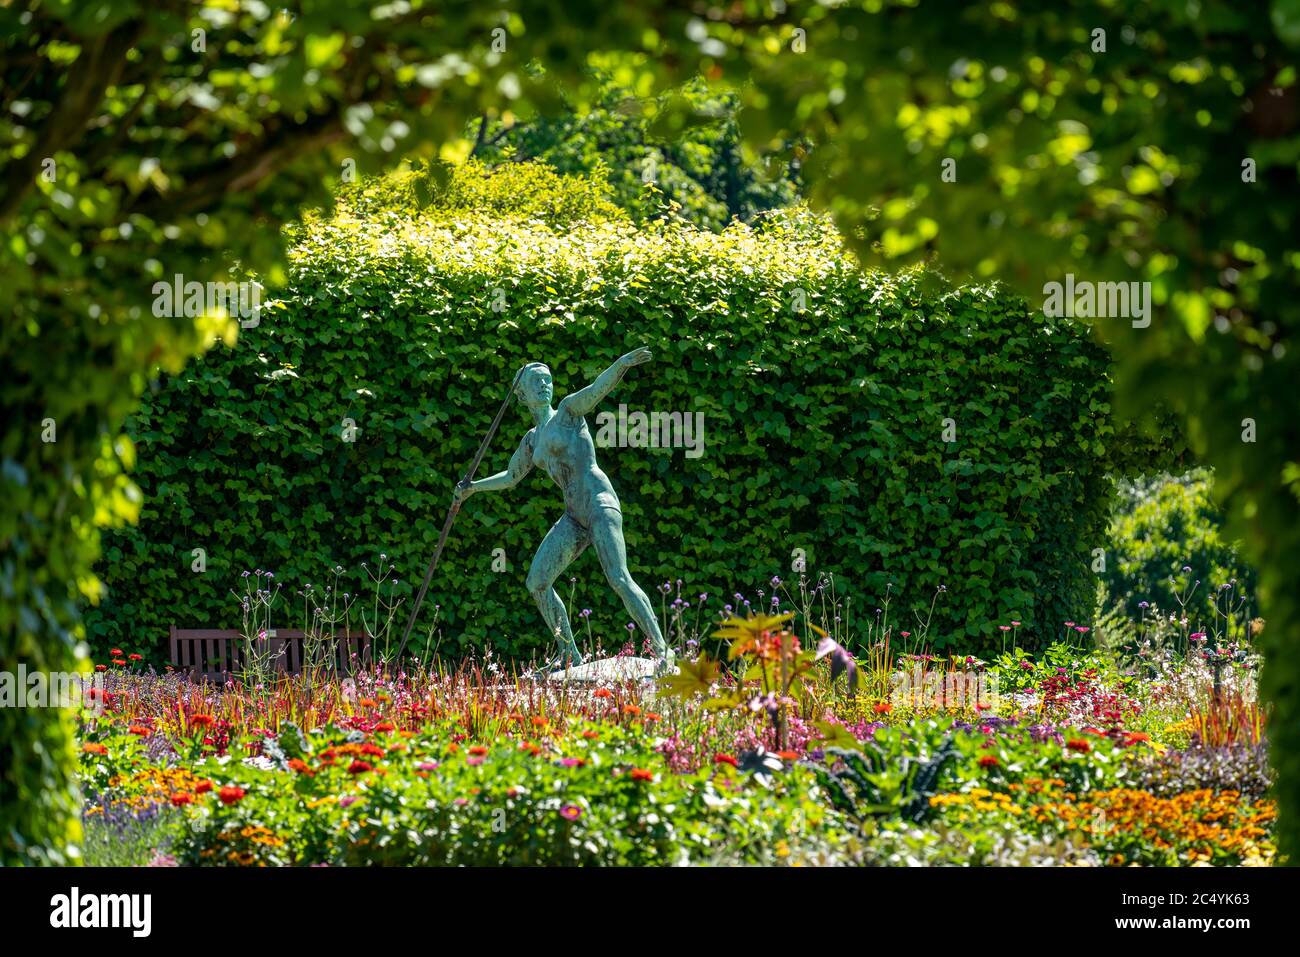 The Grugapark, Essen, botanical garden, park for leisure and local recreation, work of art Javelin thrower 1937, in Lindenrund, NRW, Germany Stock Photo